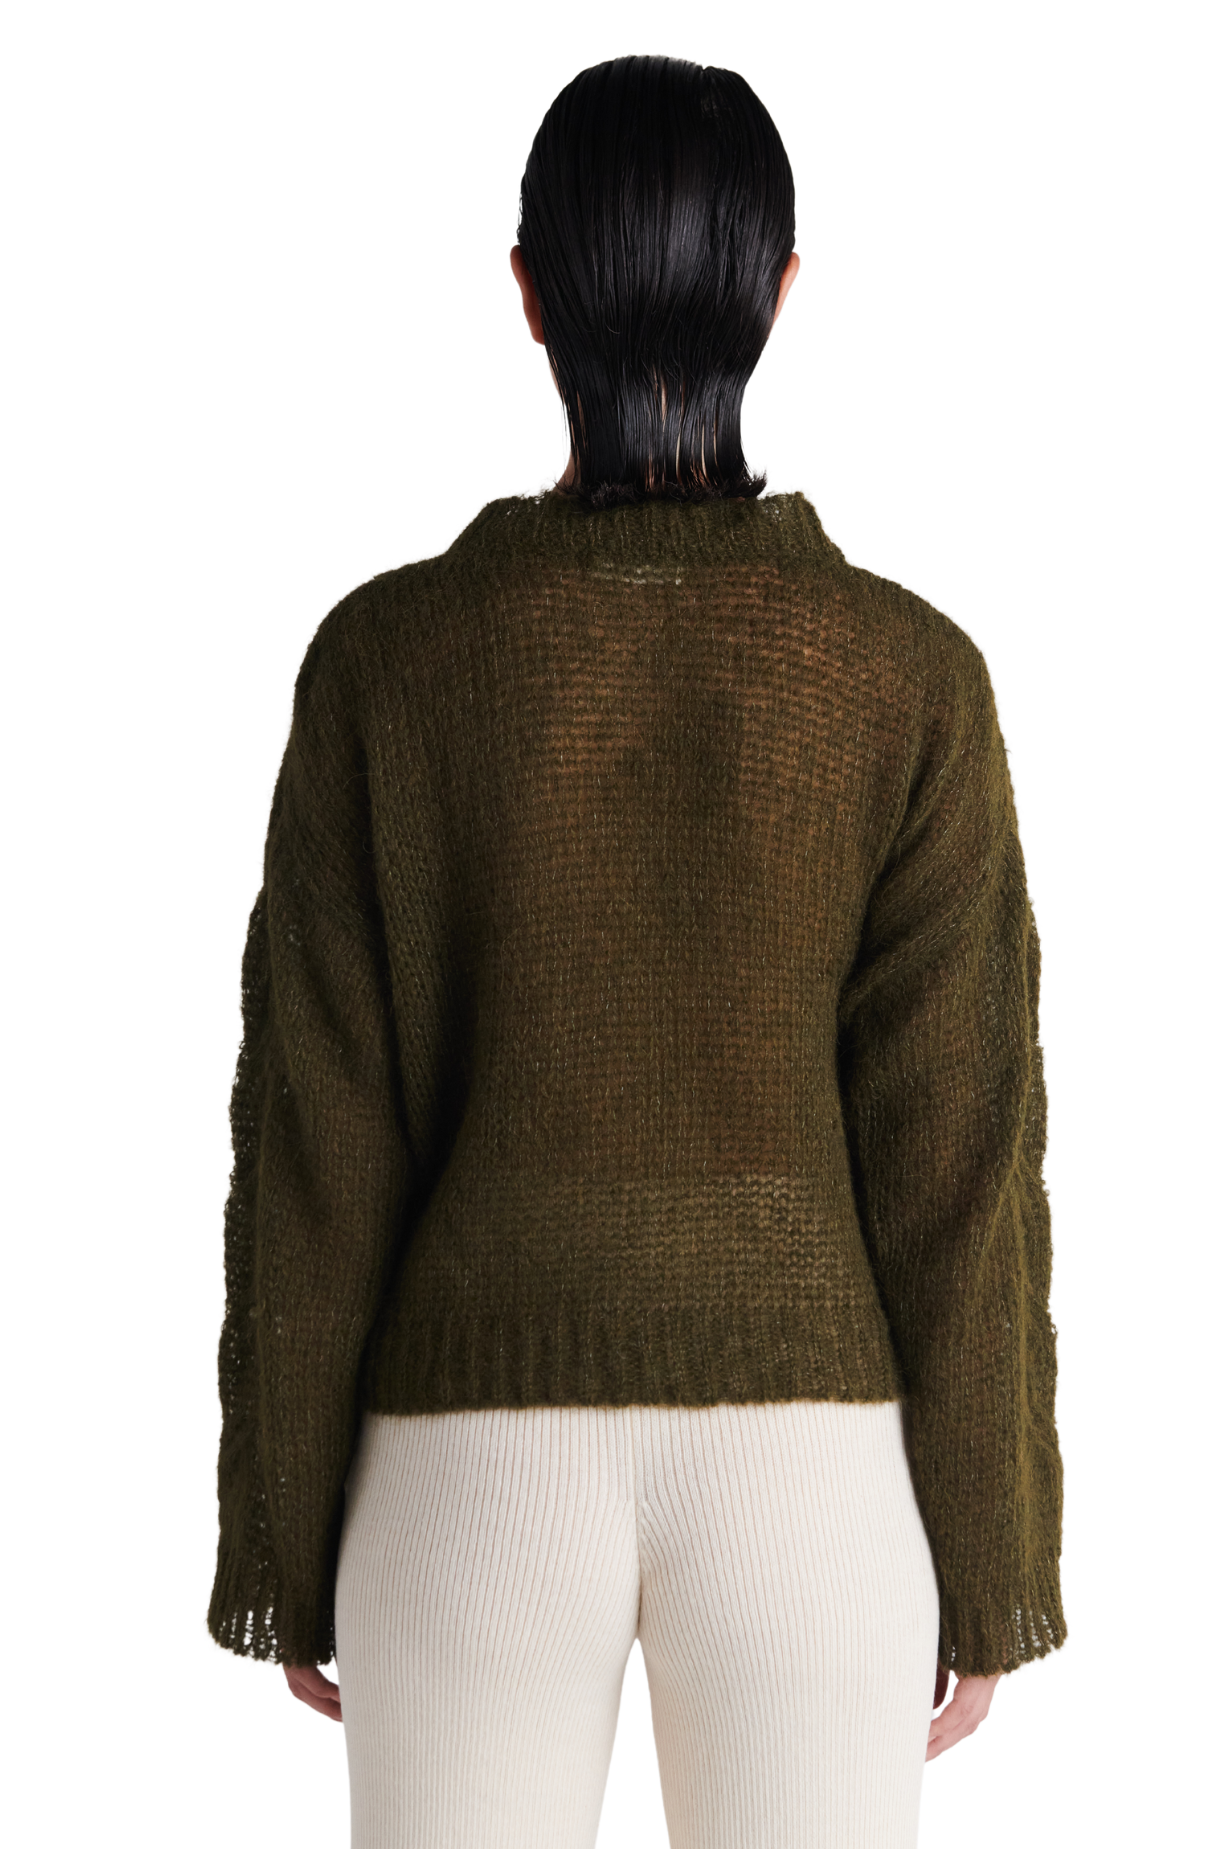 SARA sweater (pre-order) AYNI universe